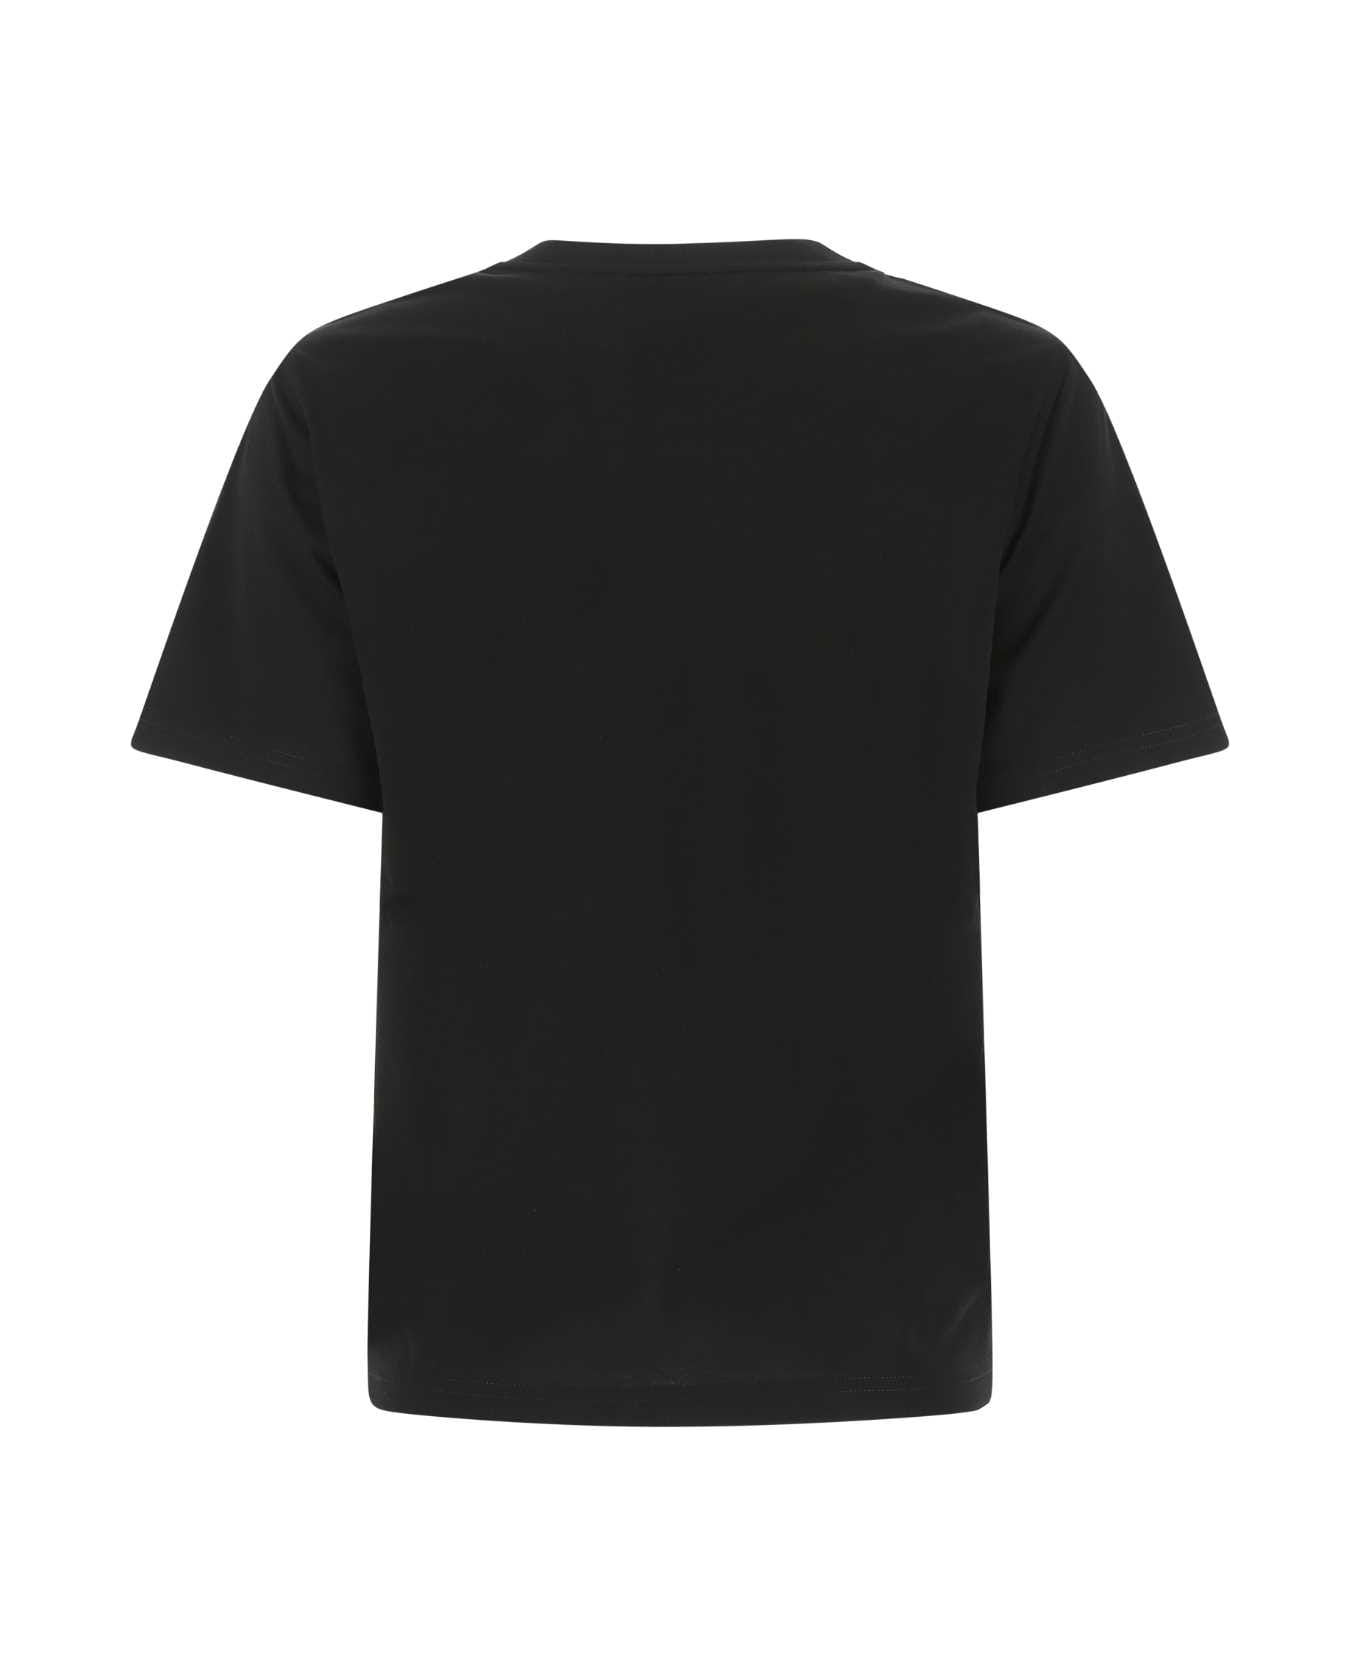 Burberry Black Cotton T-shirt - A1189